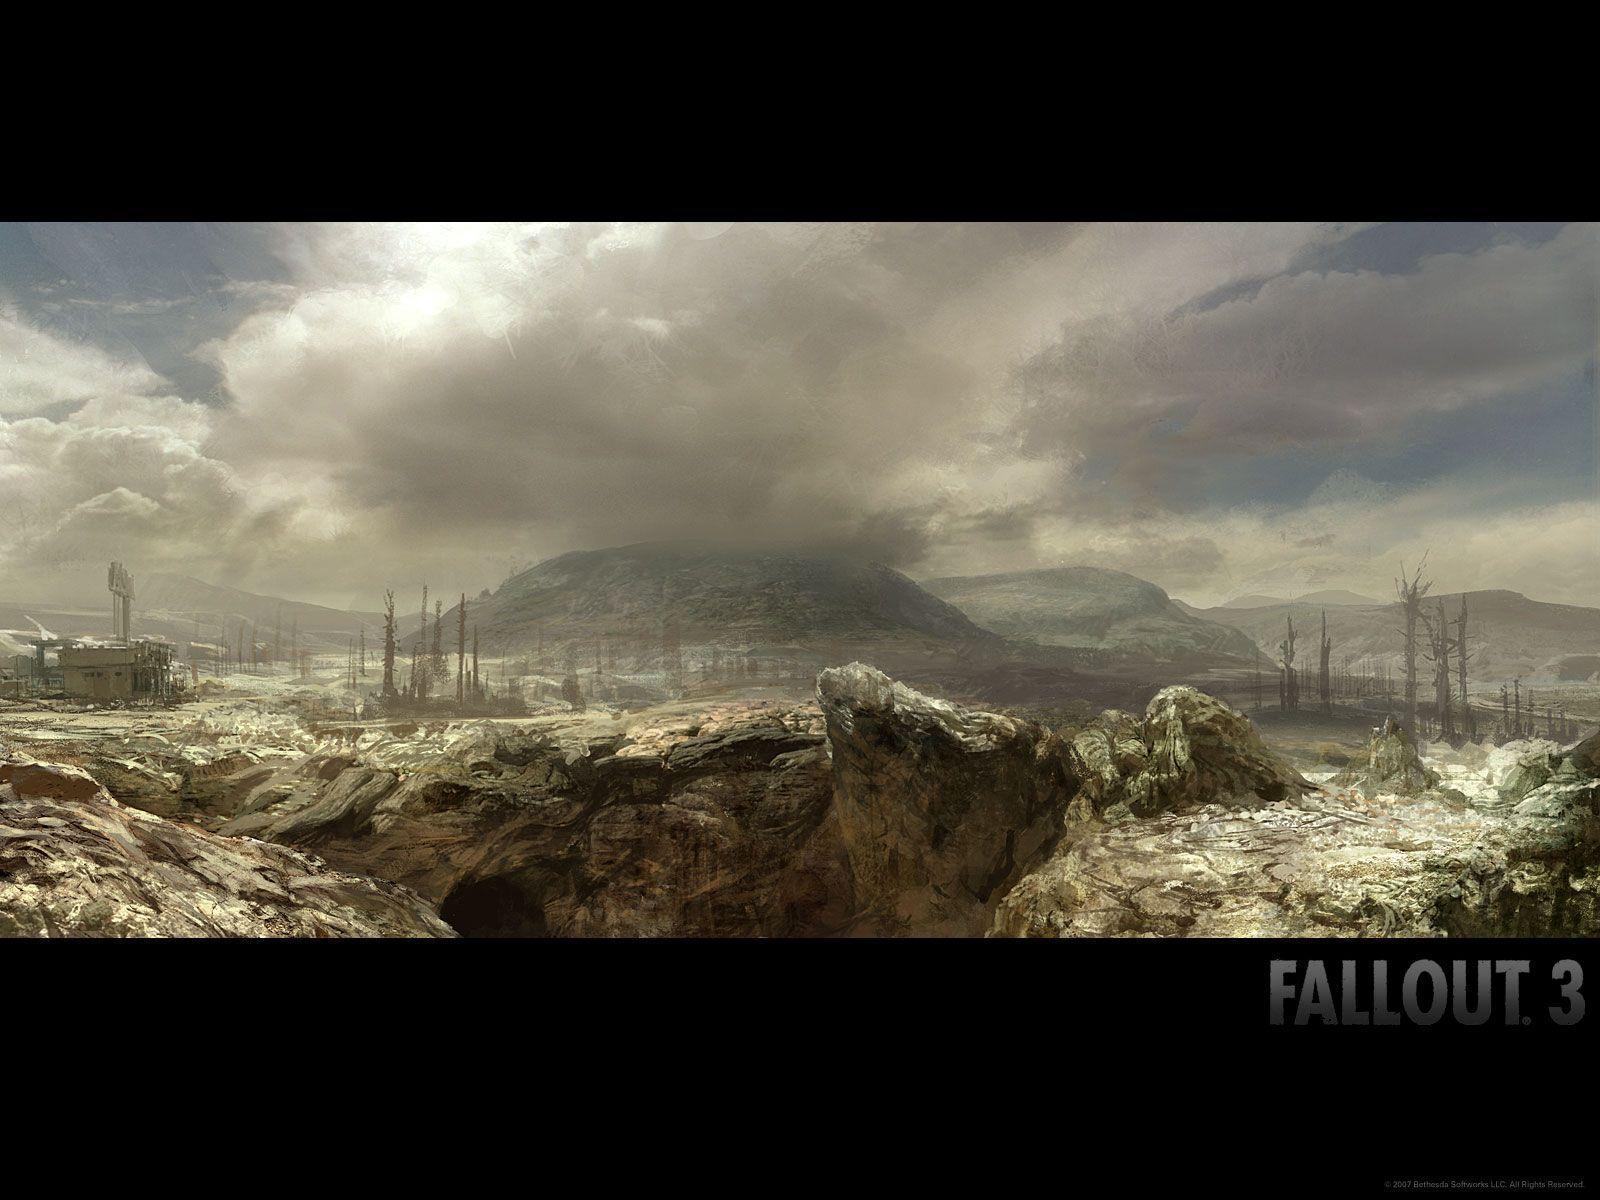 Fallout 3 Wallpaper Download